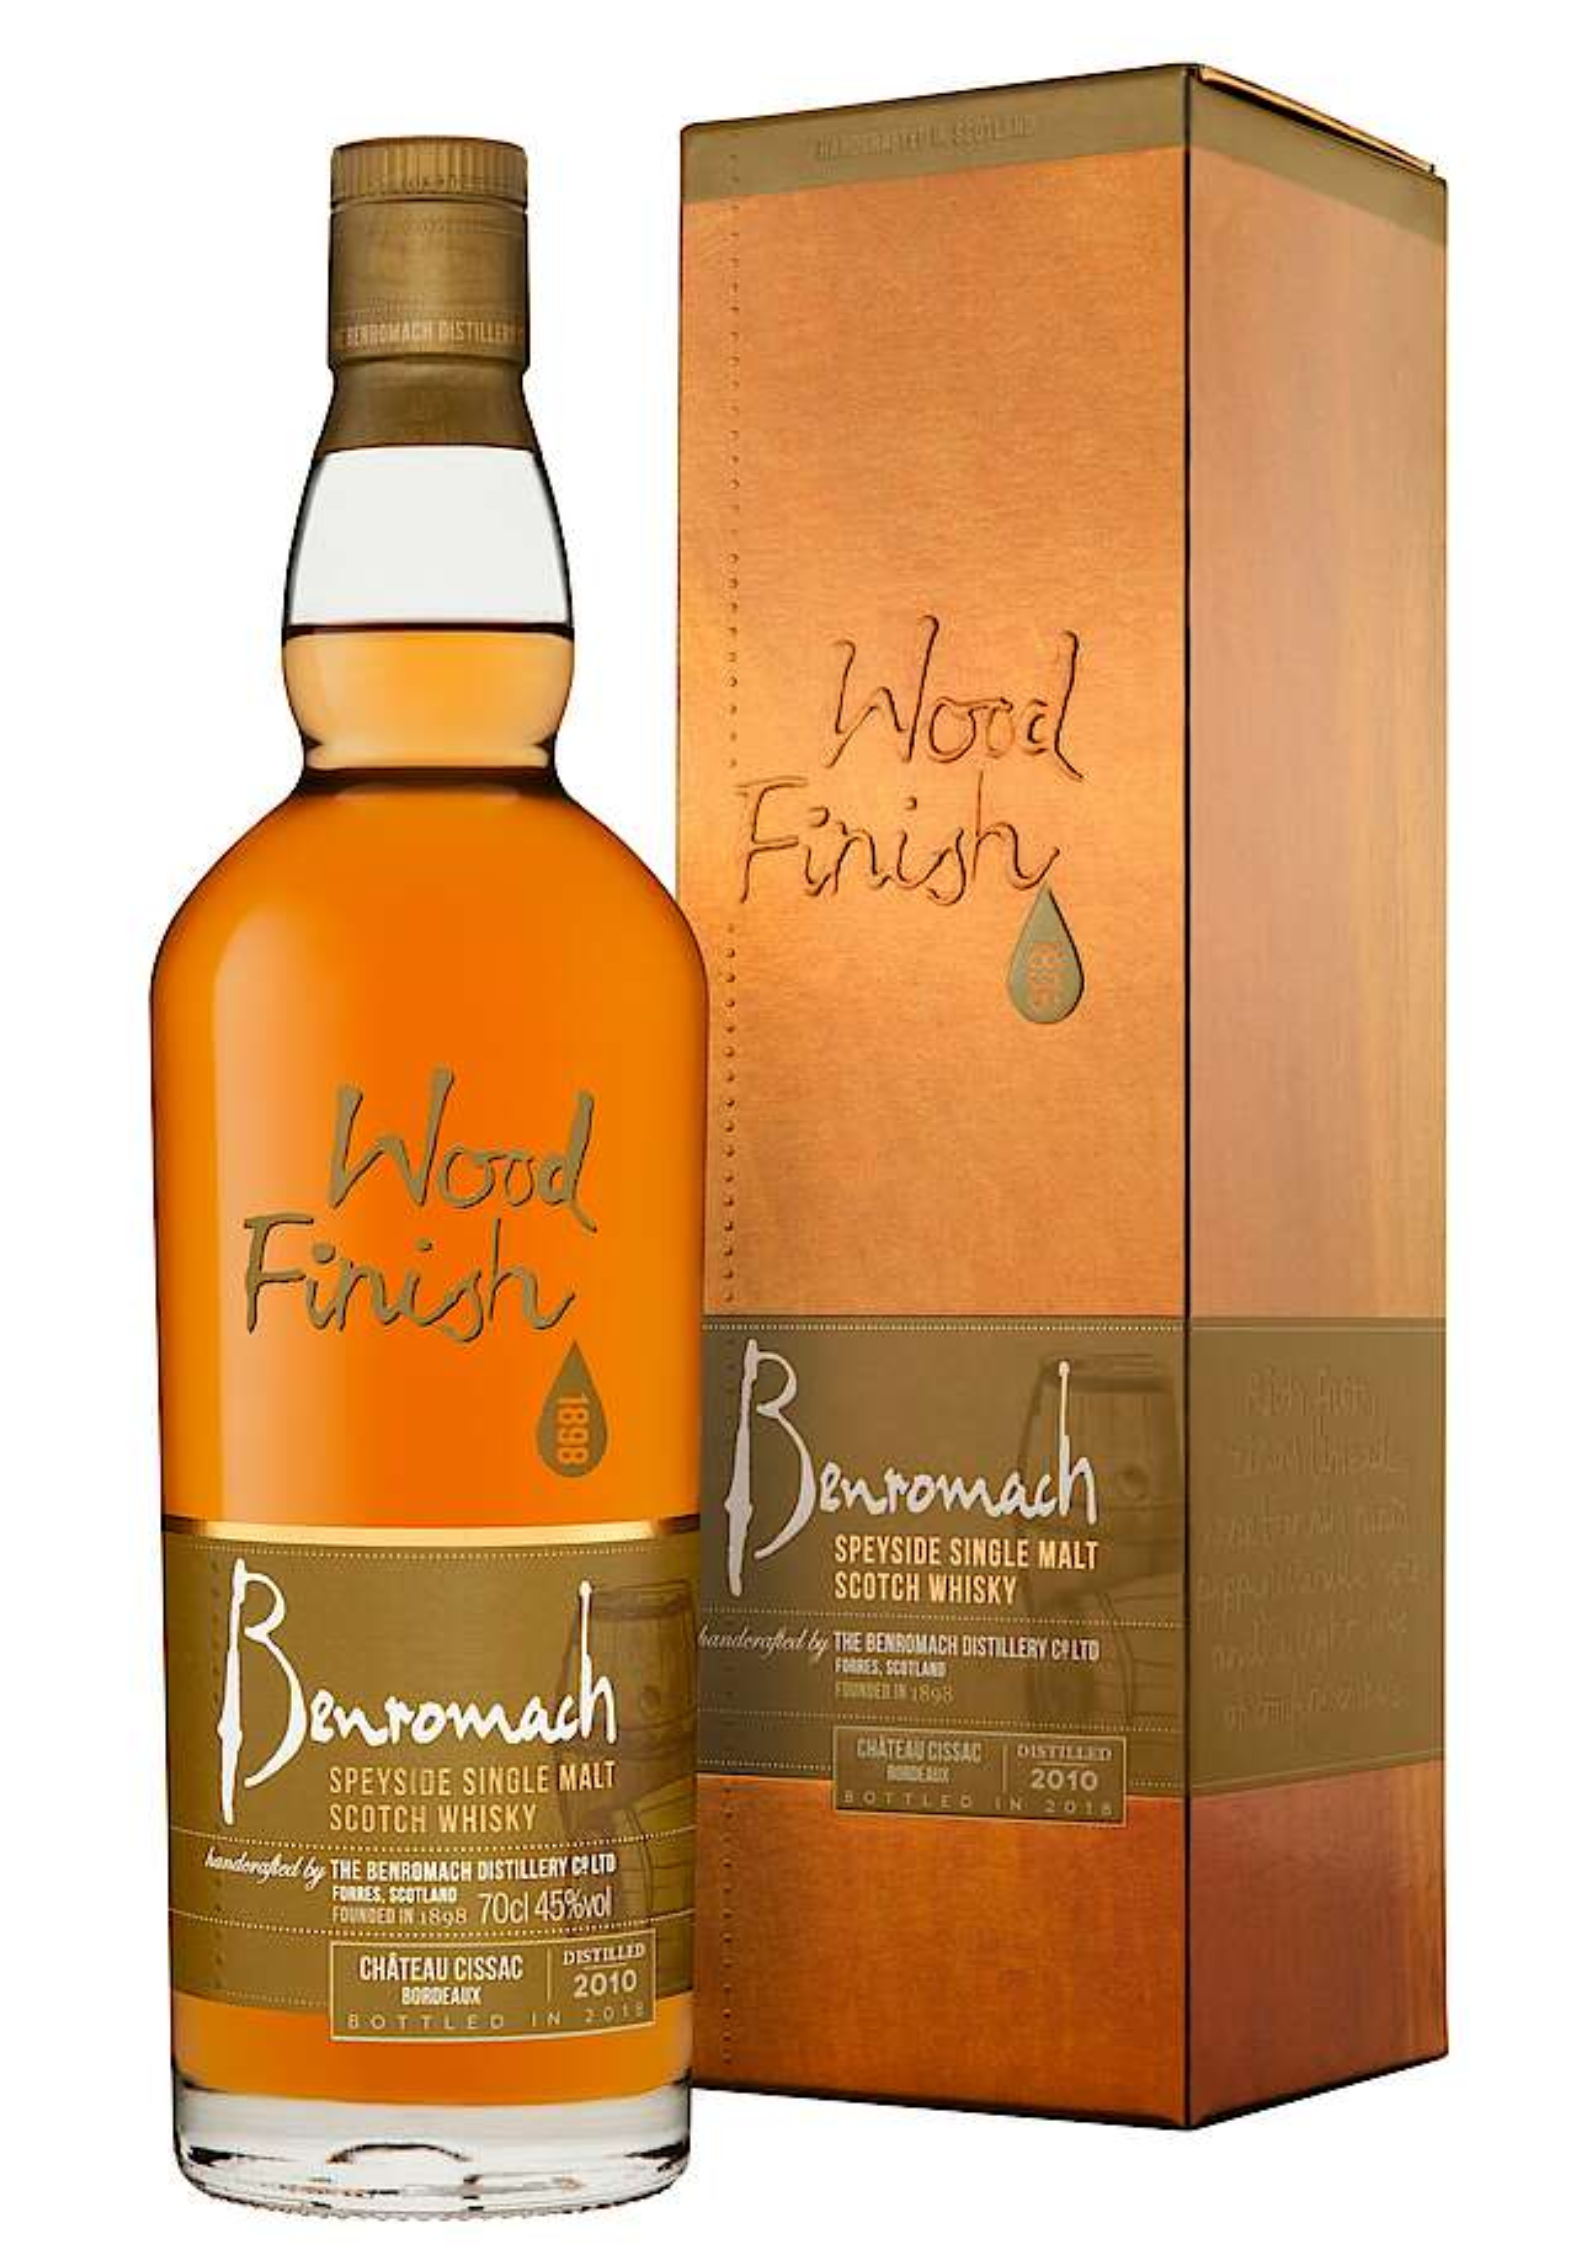 Bottle of 2010 Benromach Wood Finish Château Cissac, Speyside Single Malt Whisky, 45% - The Spirits Room